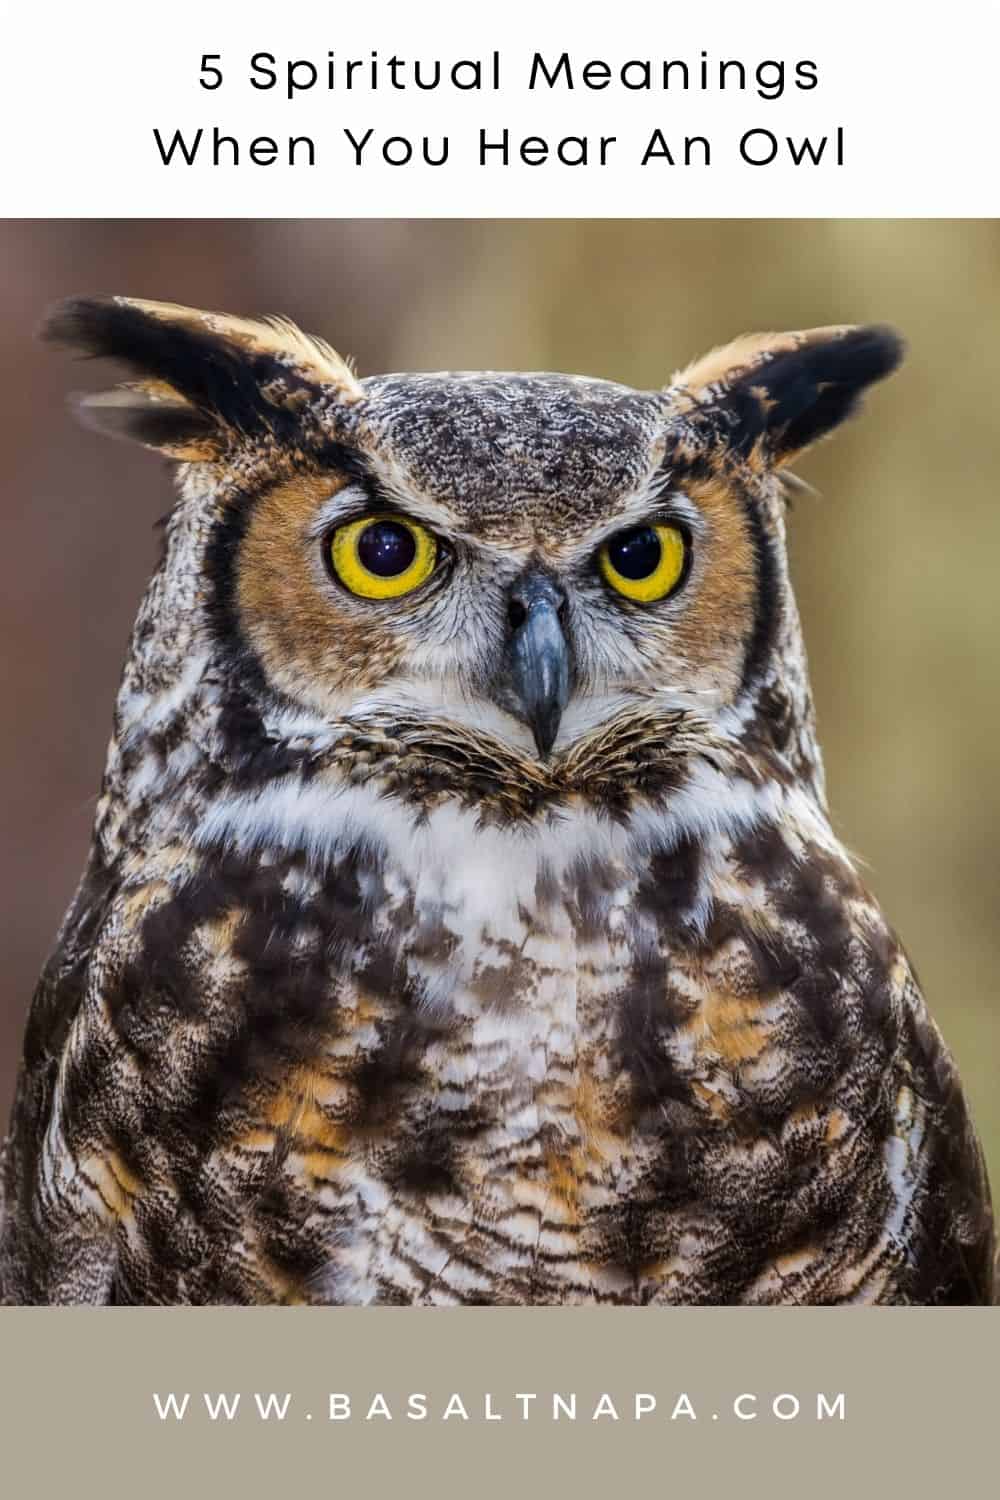 5 Spiritual Meanings When You Hear An Owl